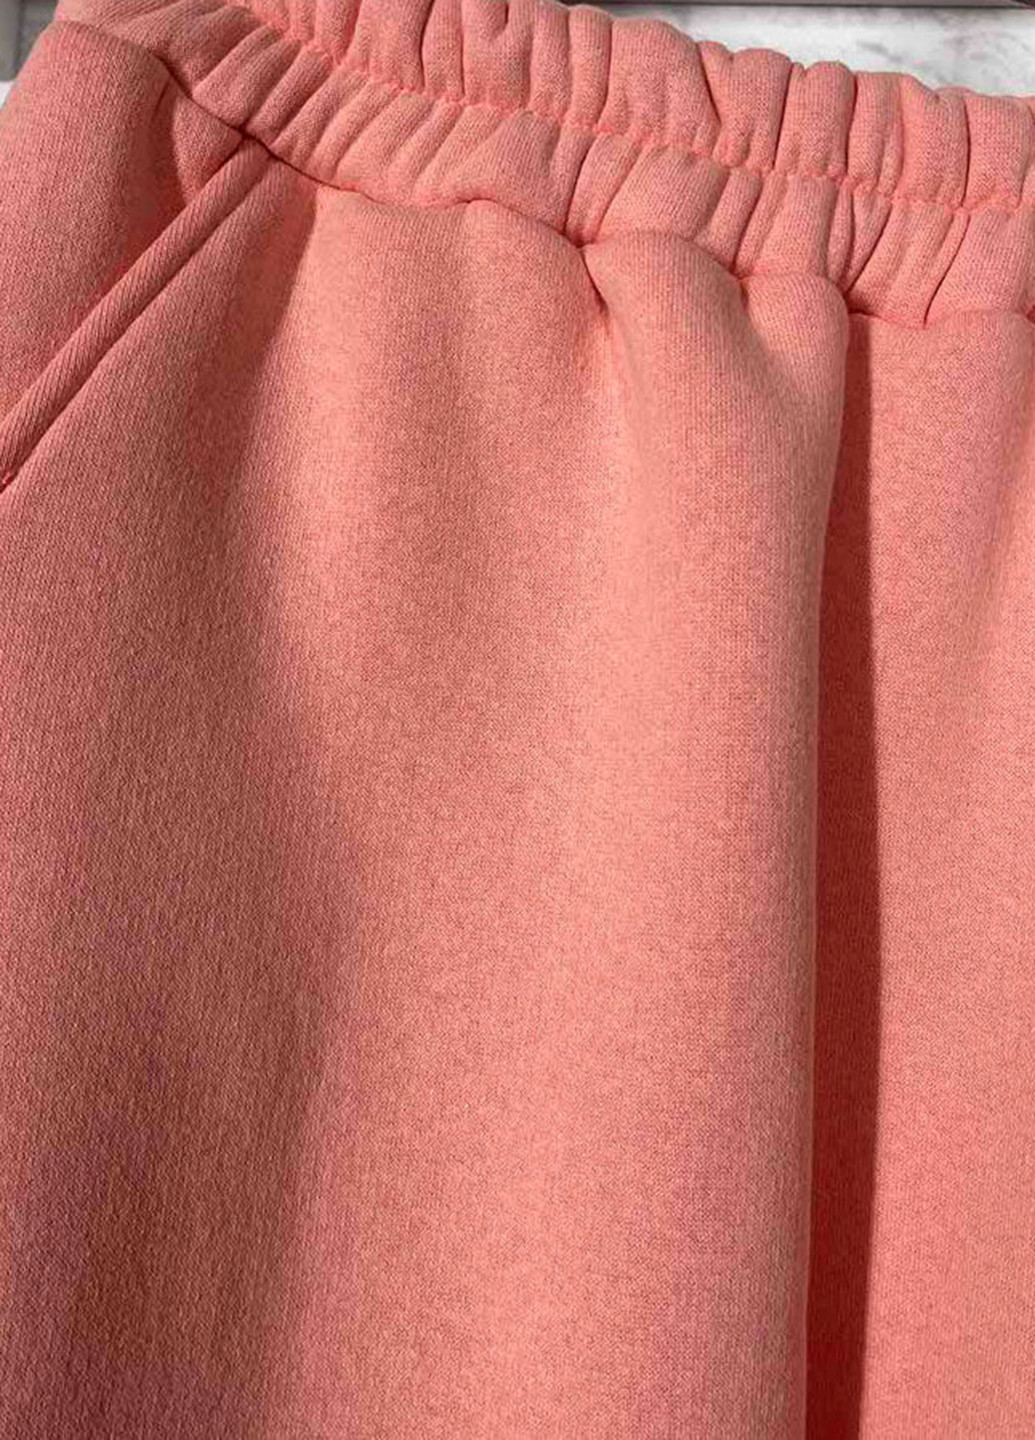 Спортивный костюм (худи, брюки) Blanka однотонный розовый хлопок, трикотаж